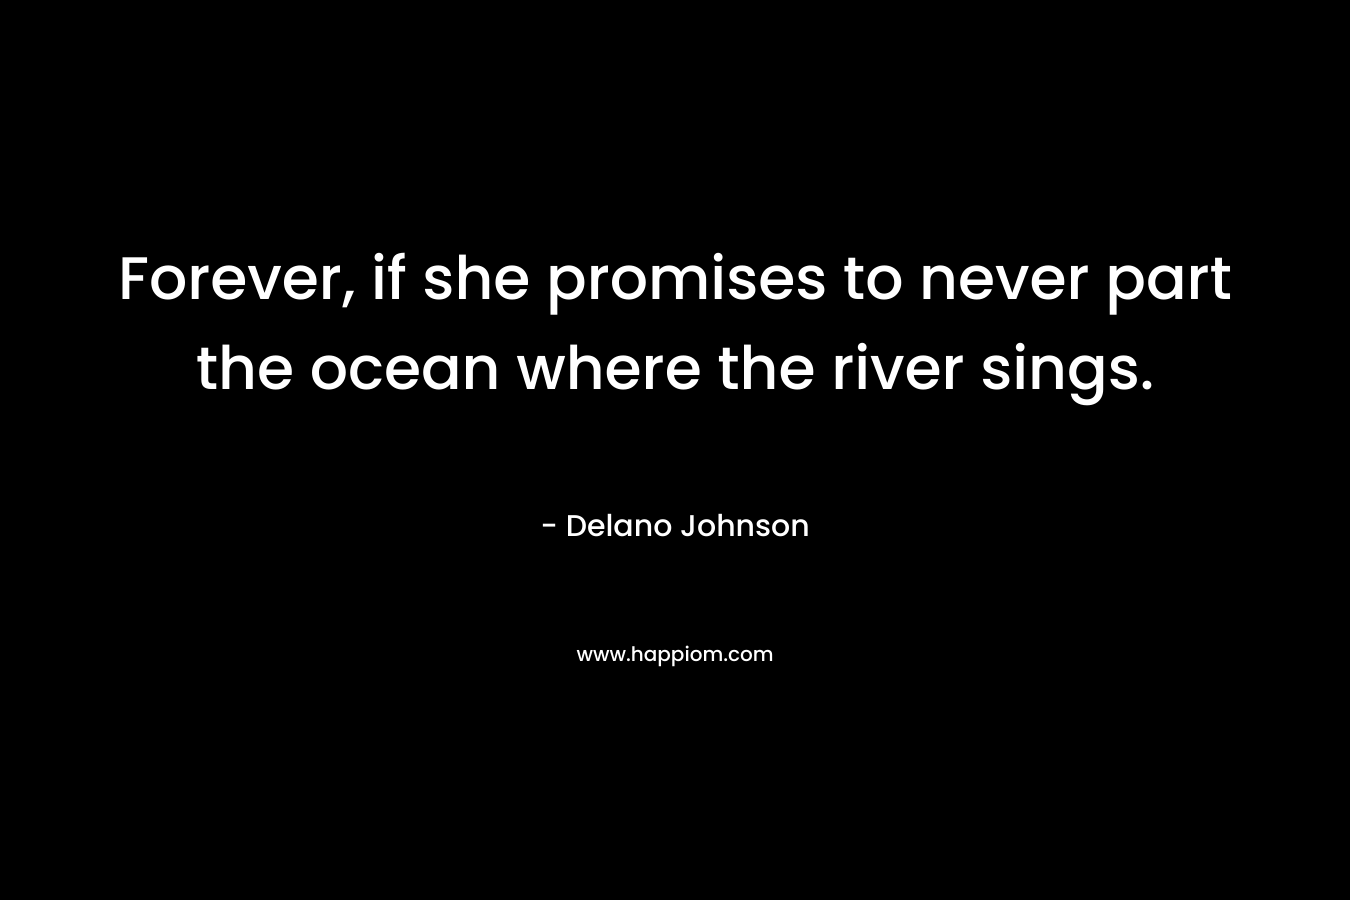 Forever, if she promises to never part the ocean where the river sings. – Delano Johnson